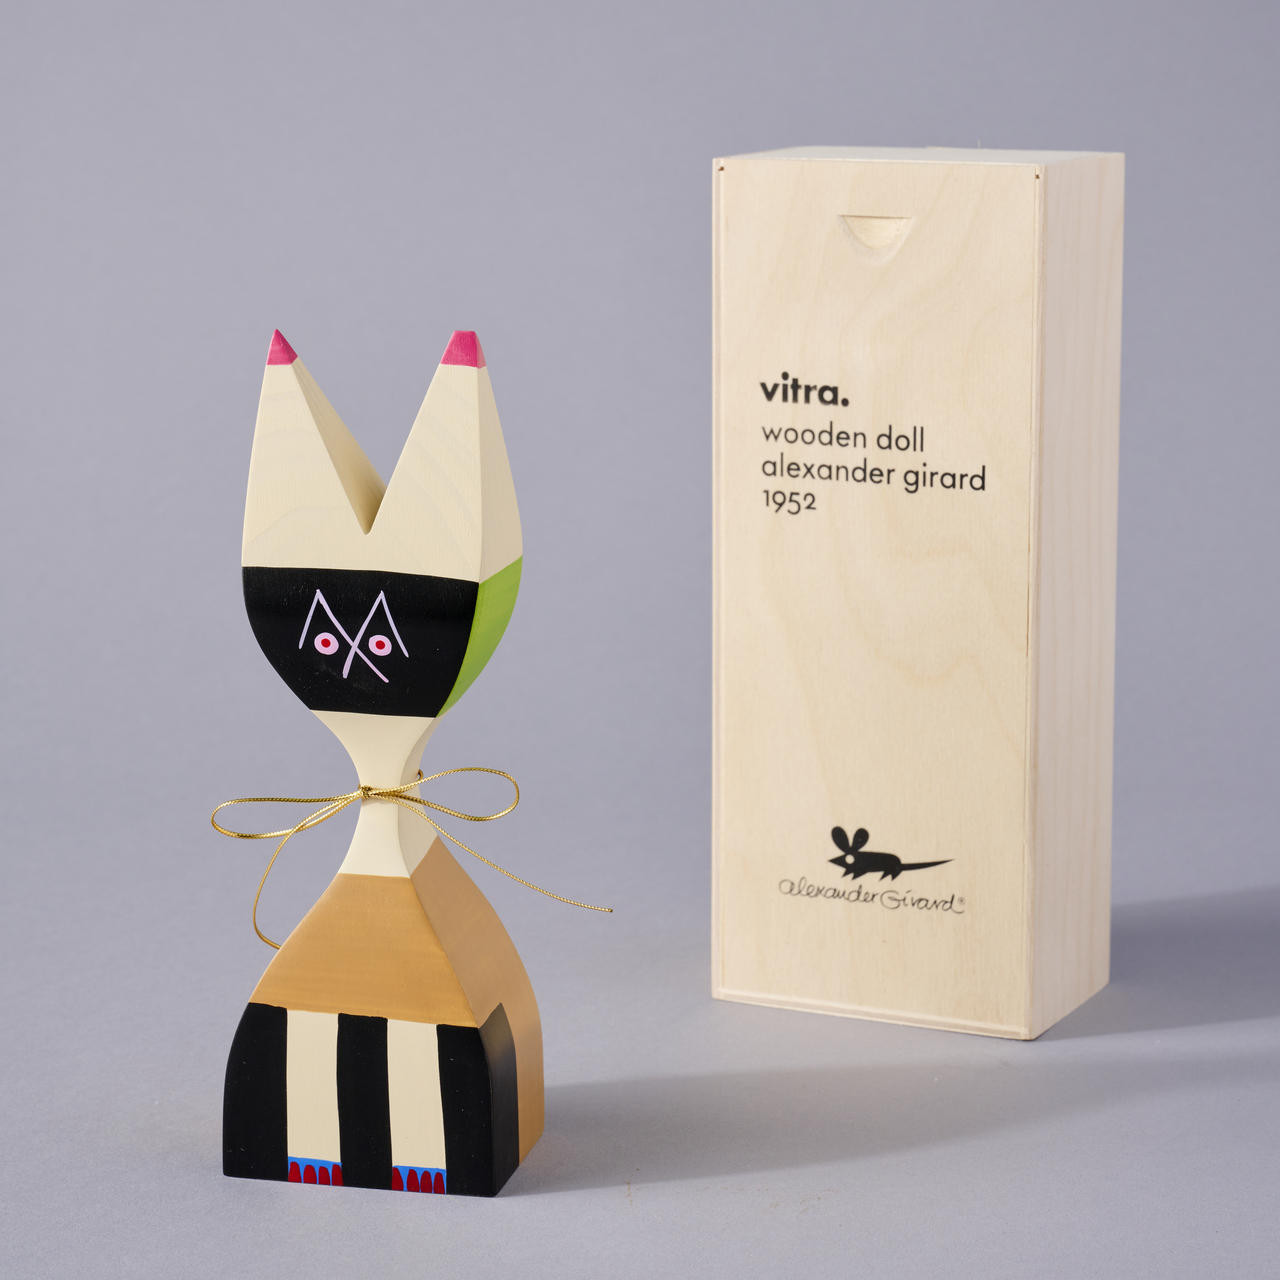 Alexander Girard Wood Dolls produced by Vitra